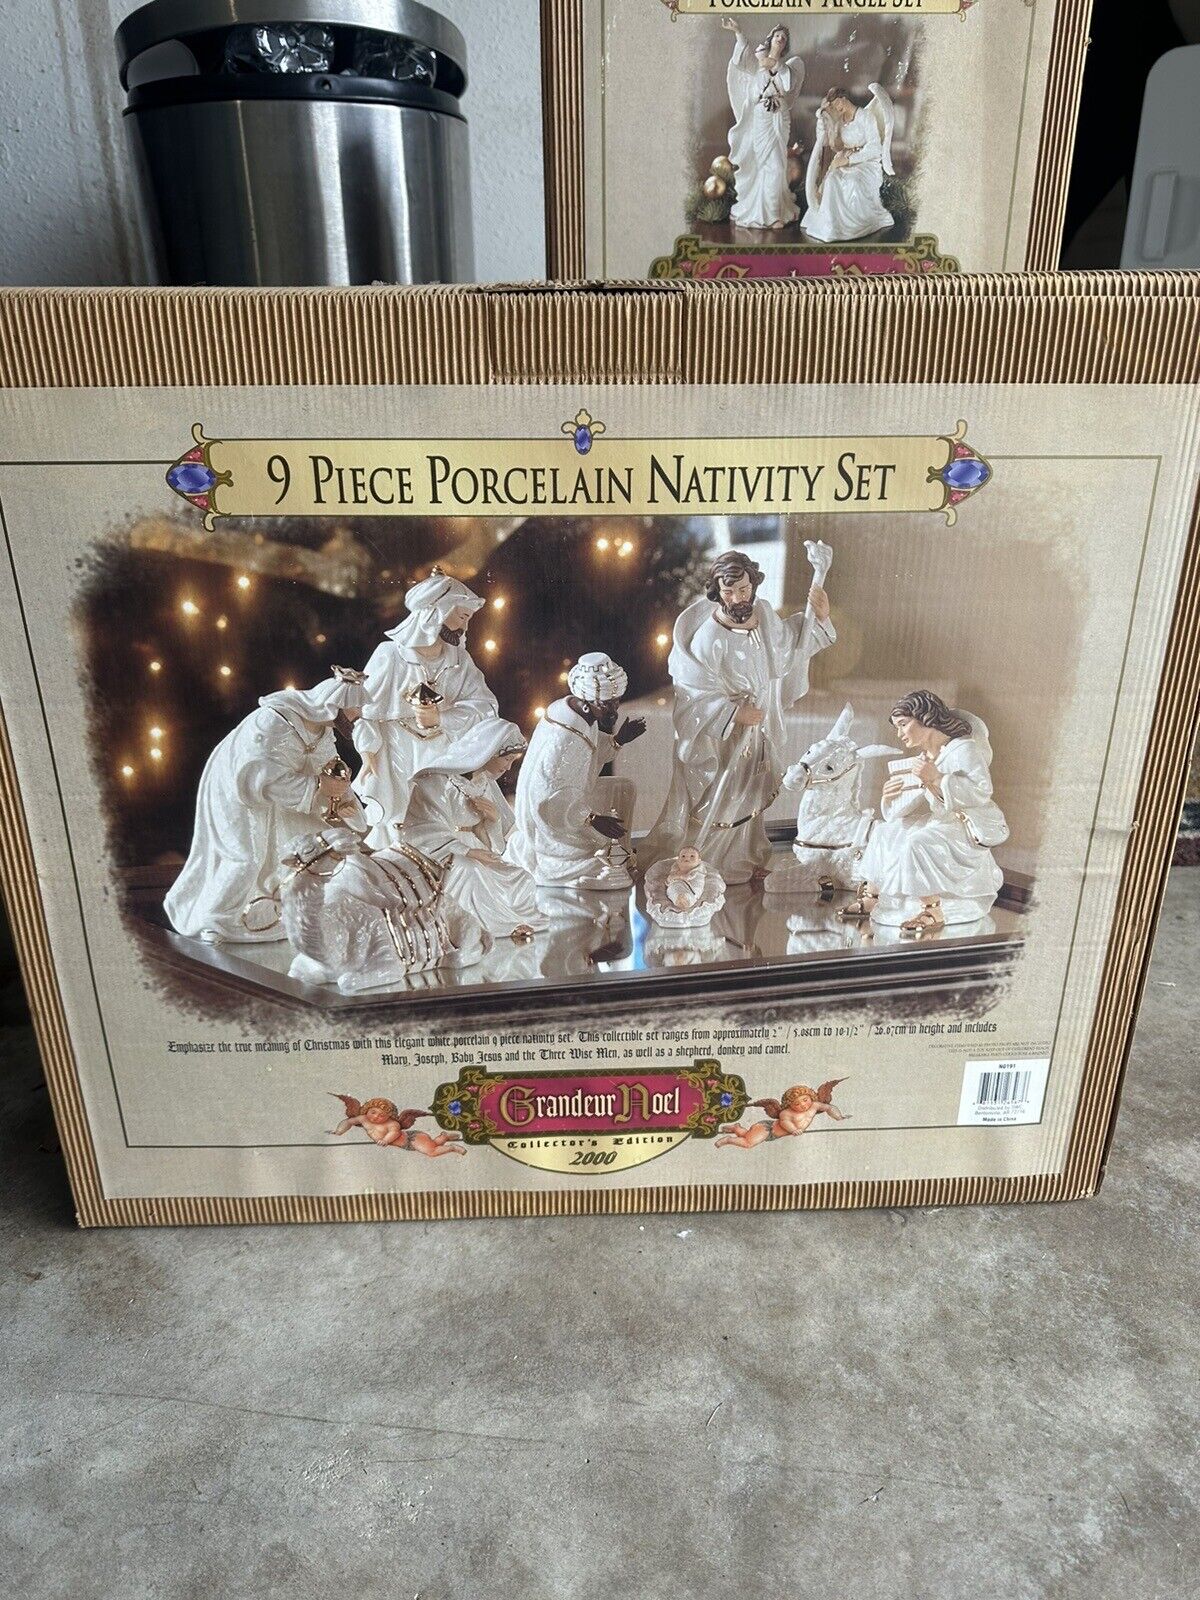 Vtg Grandeur Noel Nativity Collector’s Edition 2000 White Porcelain 9 Piece Set